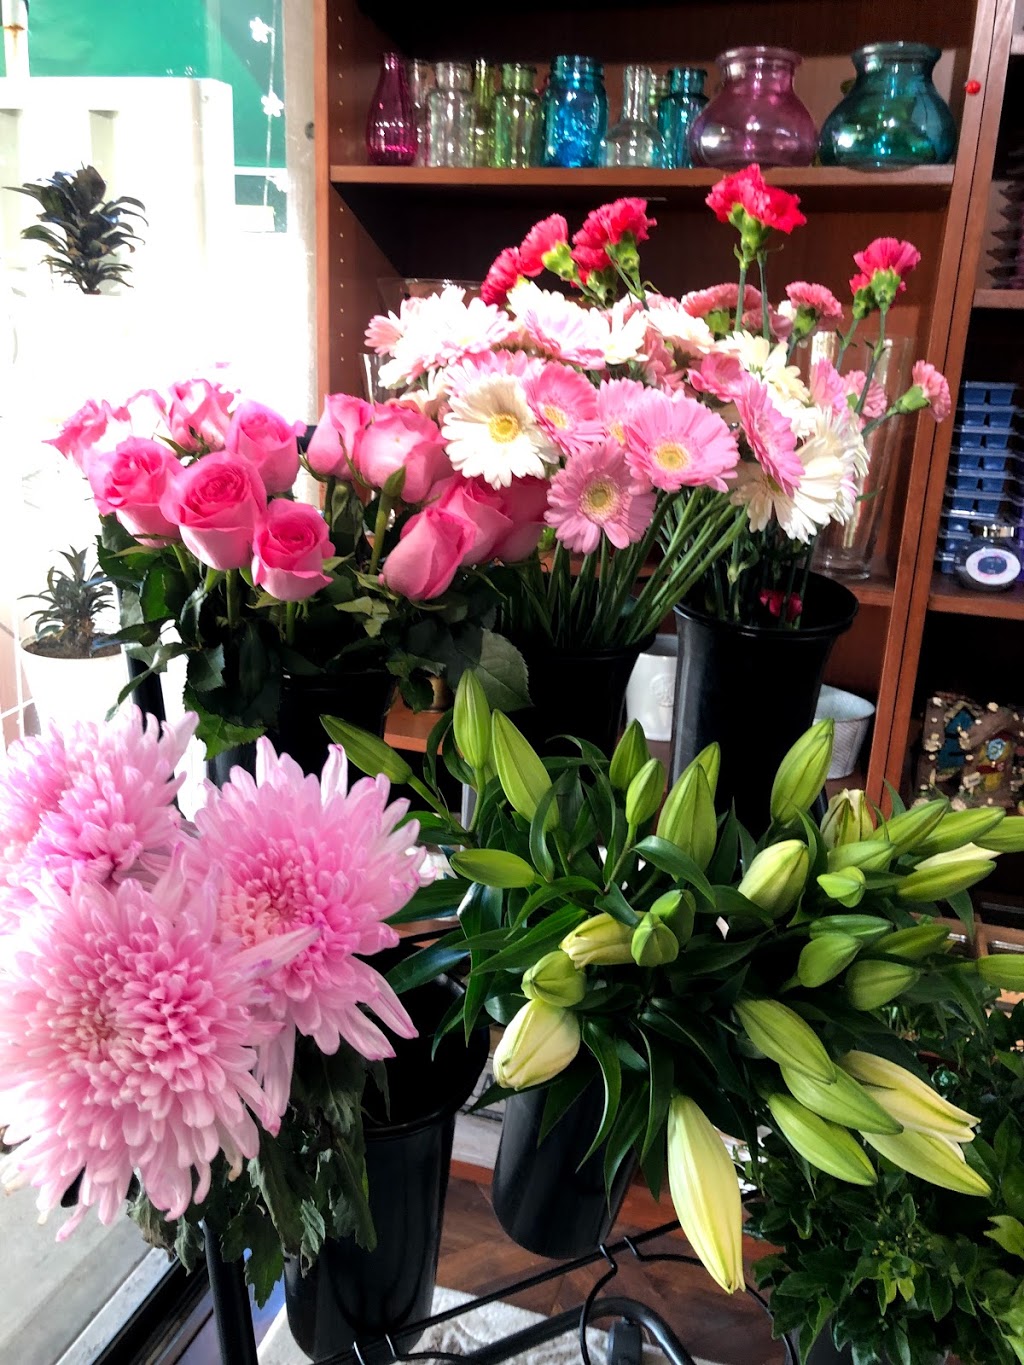 The Secret Garden Florist | florist | 32 Ashmole Rd, Redcliffe QLD 4020, Australia | 0466899023 OR +61 466 899 023